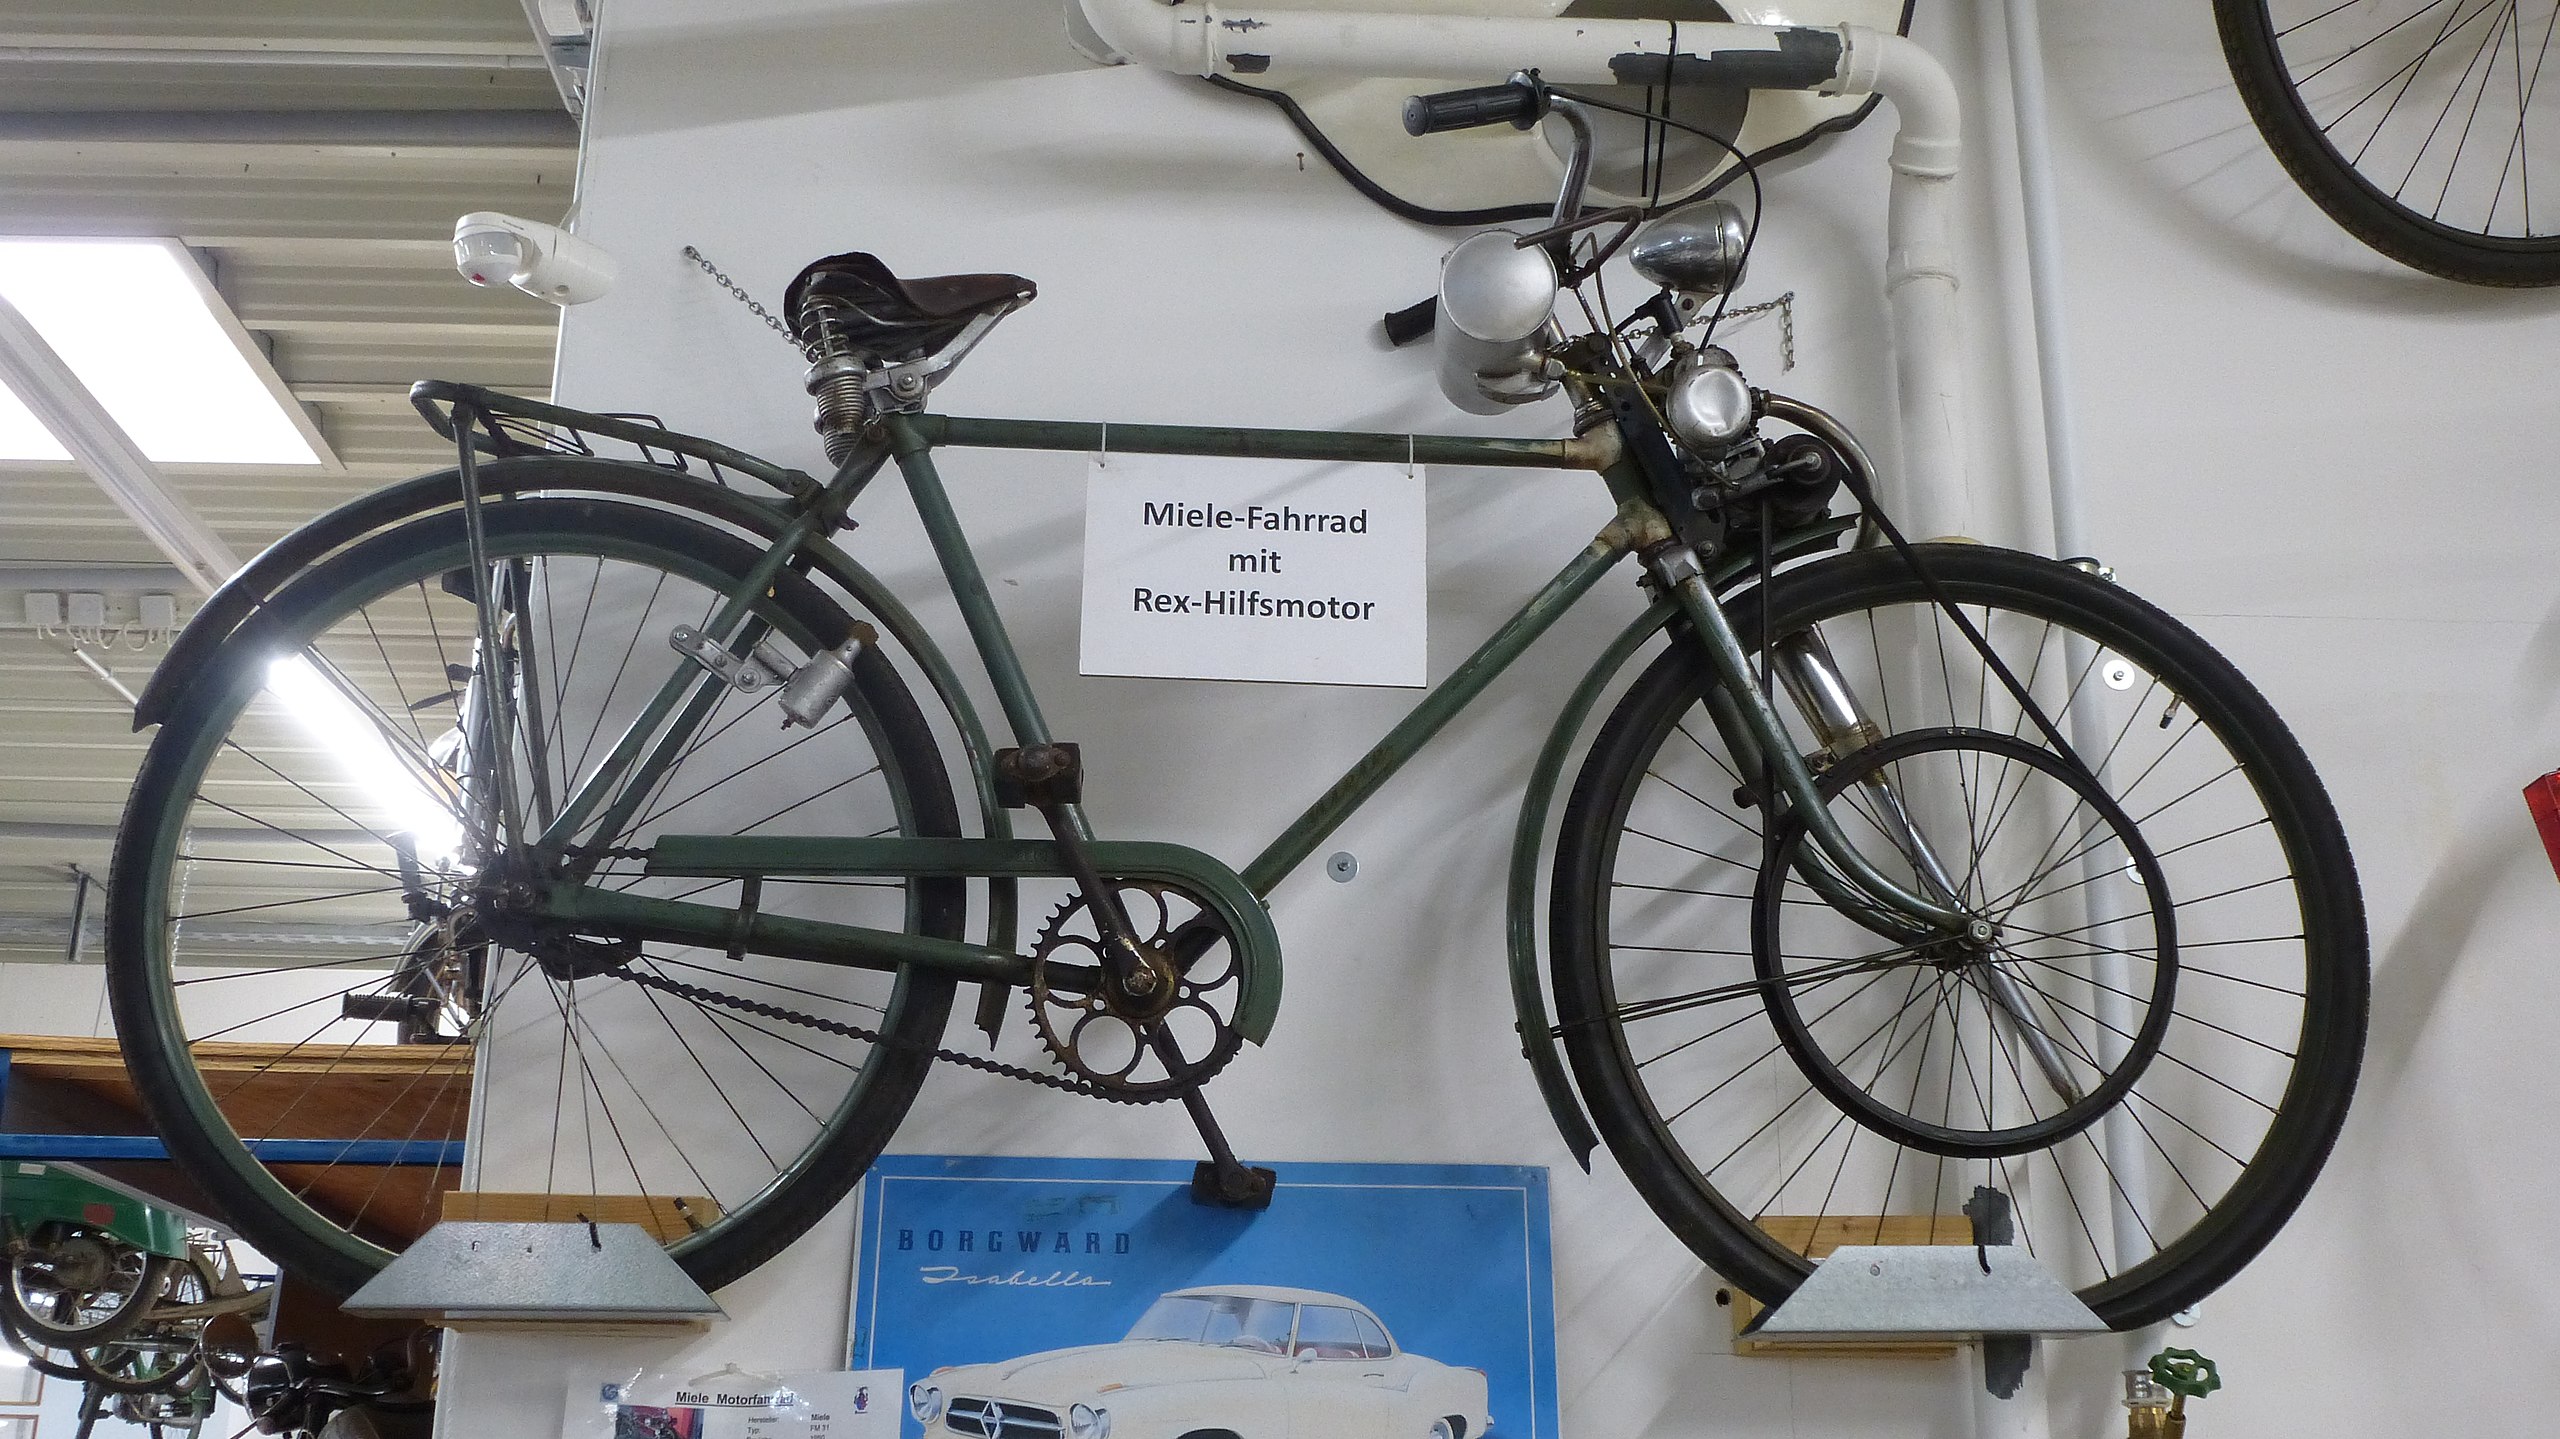 Datei:Miele-Fahrrad mit Rex-Hilfsmotor im Museum Knittlingen.JPG – Wikipedia